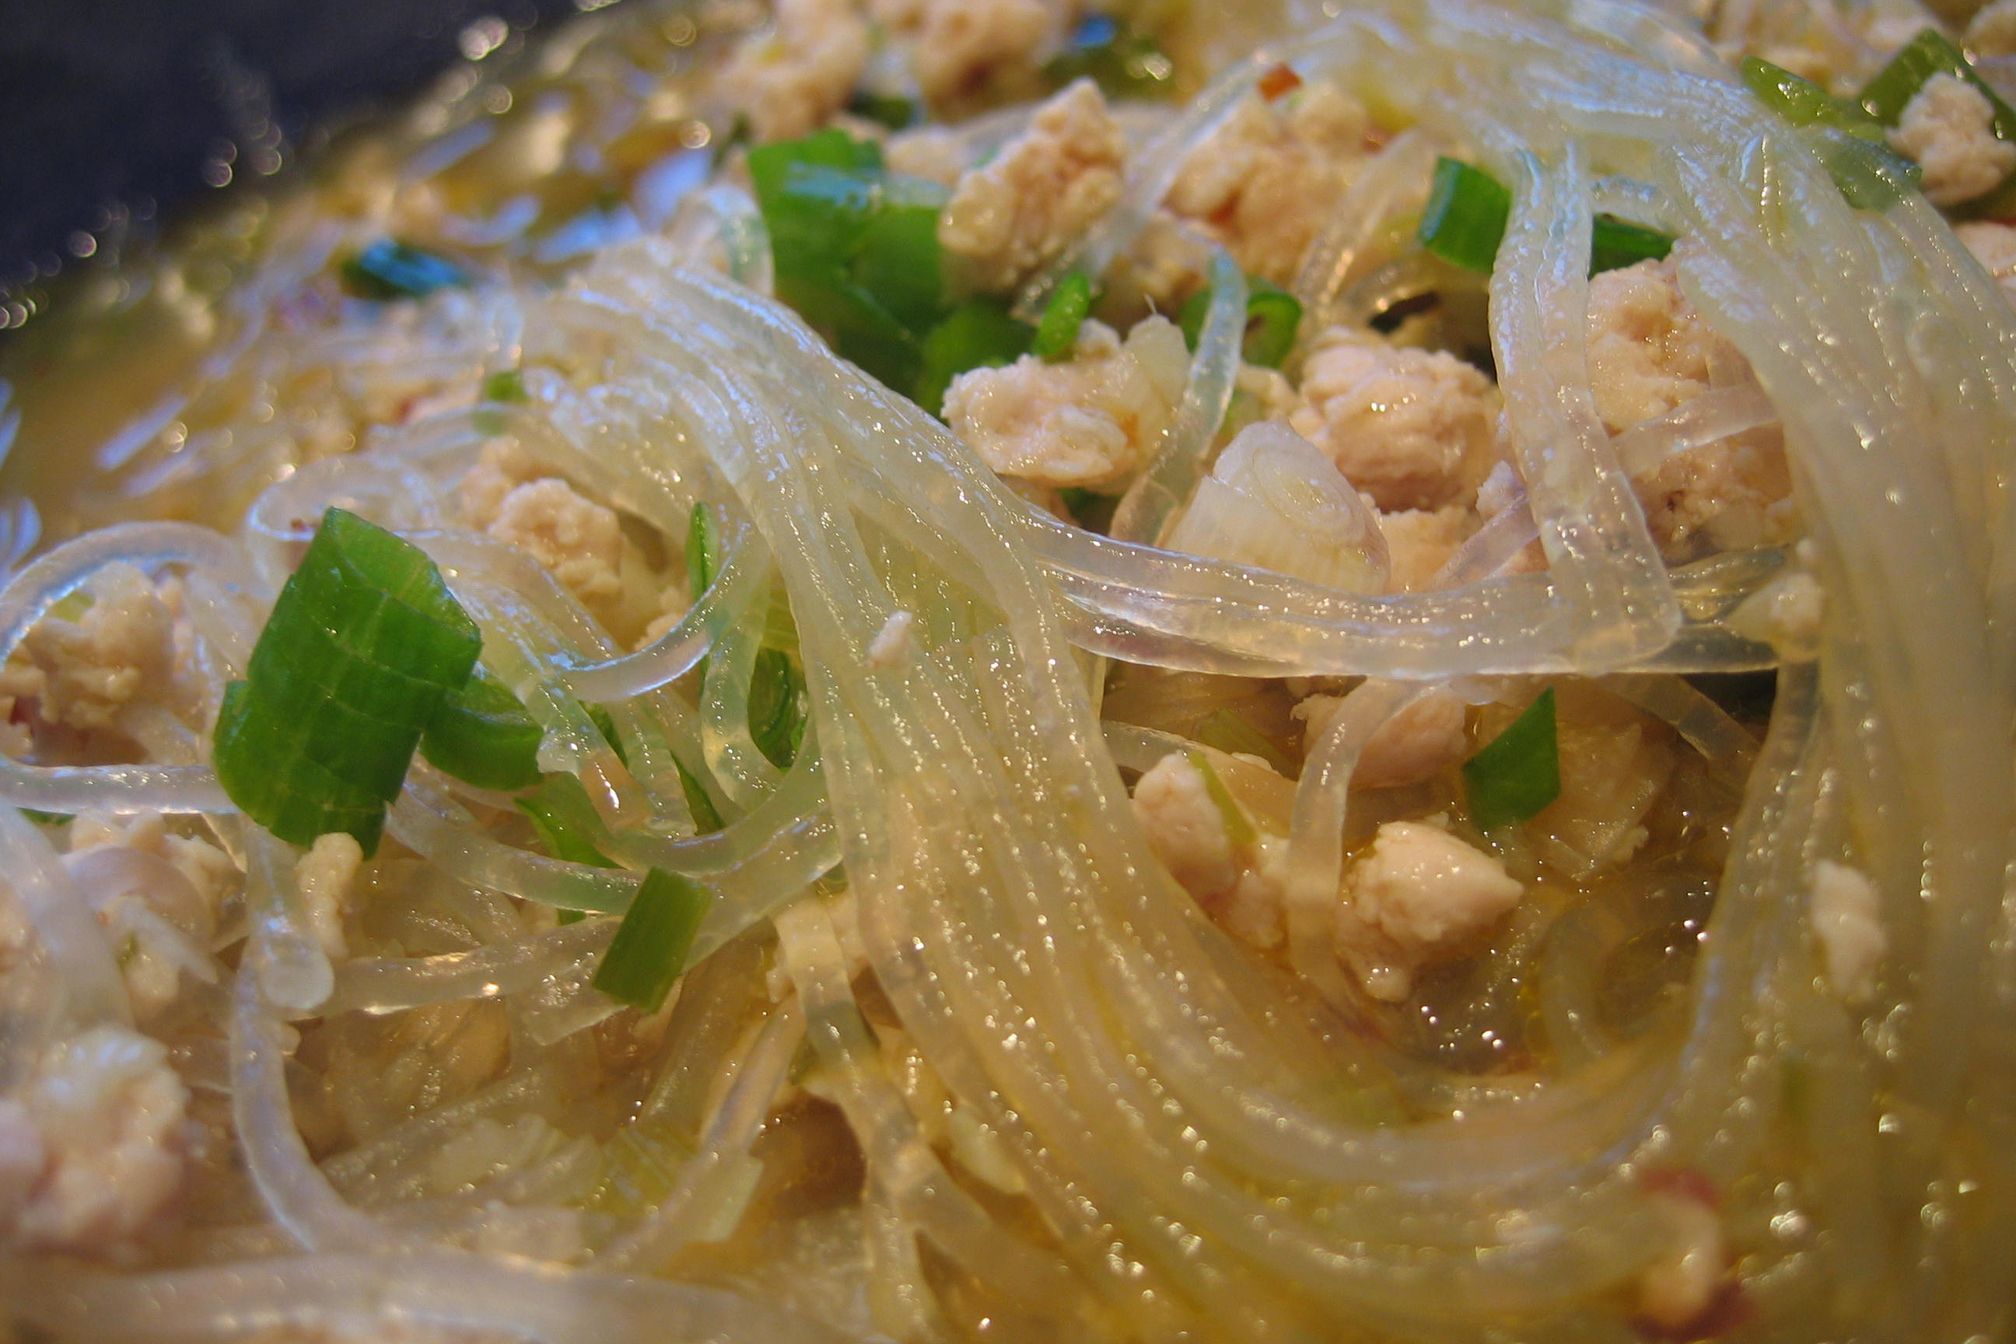 Garlic Green Onion Glass Noodle Soup Recipe On Food52,Flies In House Plants